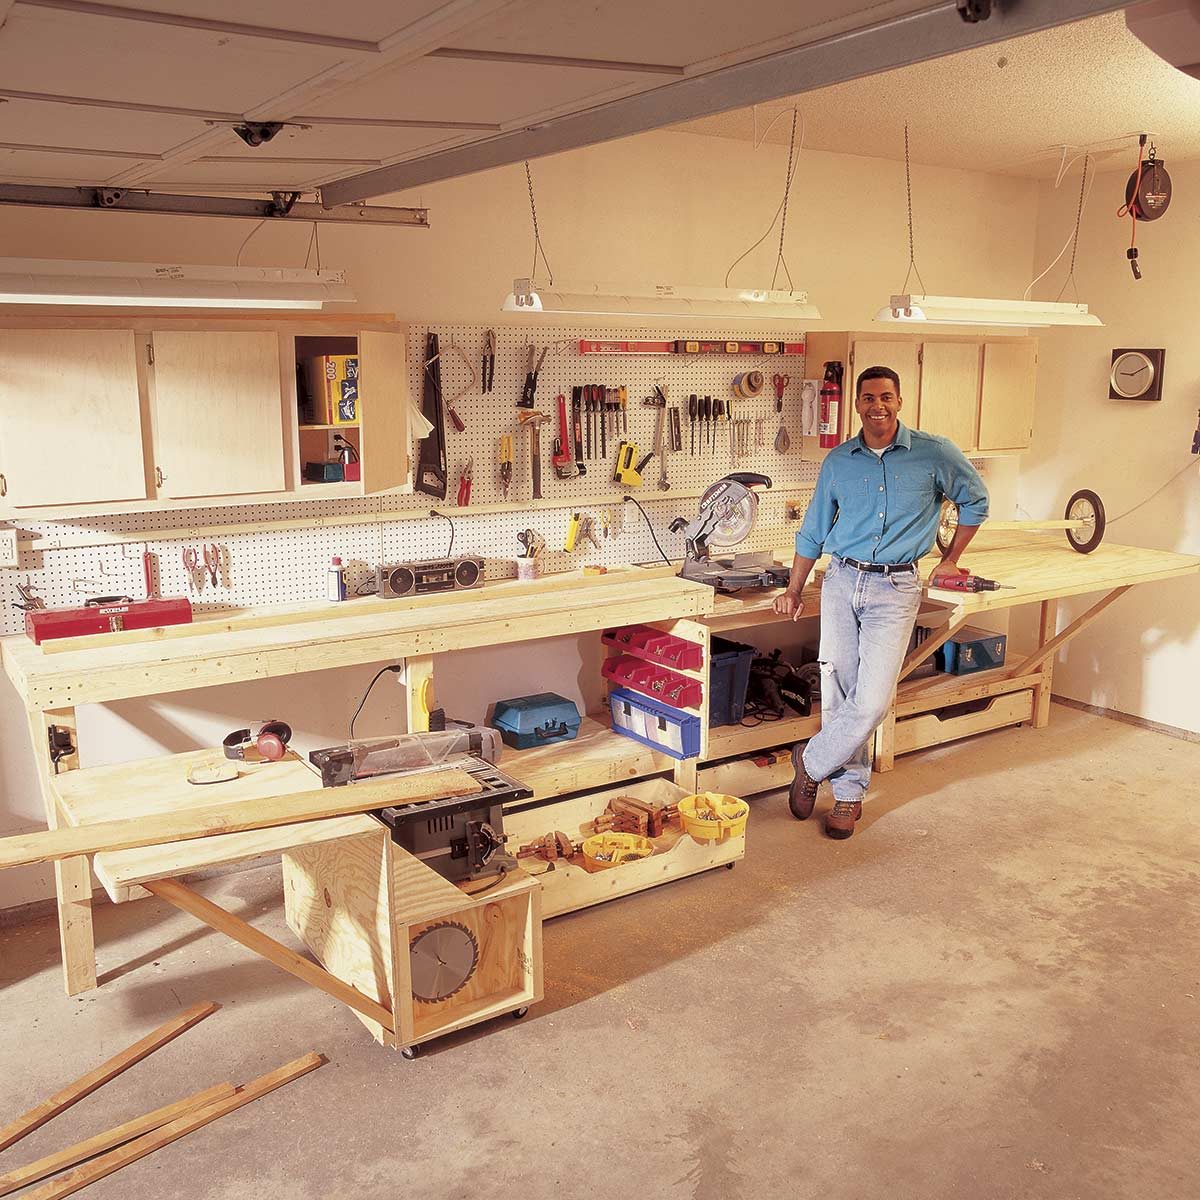 workbench-table-kit-diy-bench-storage-wooden-shelf-garage-shop-workshop